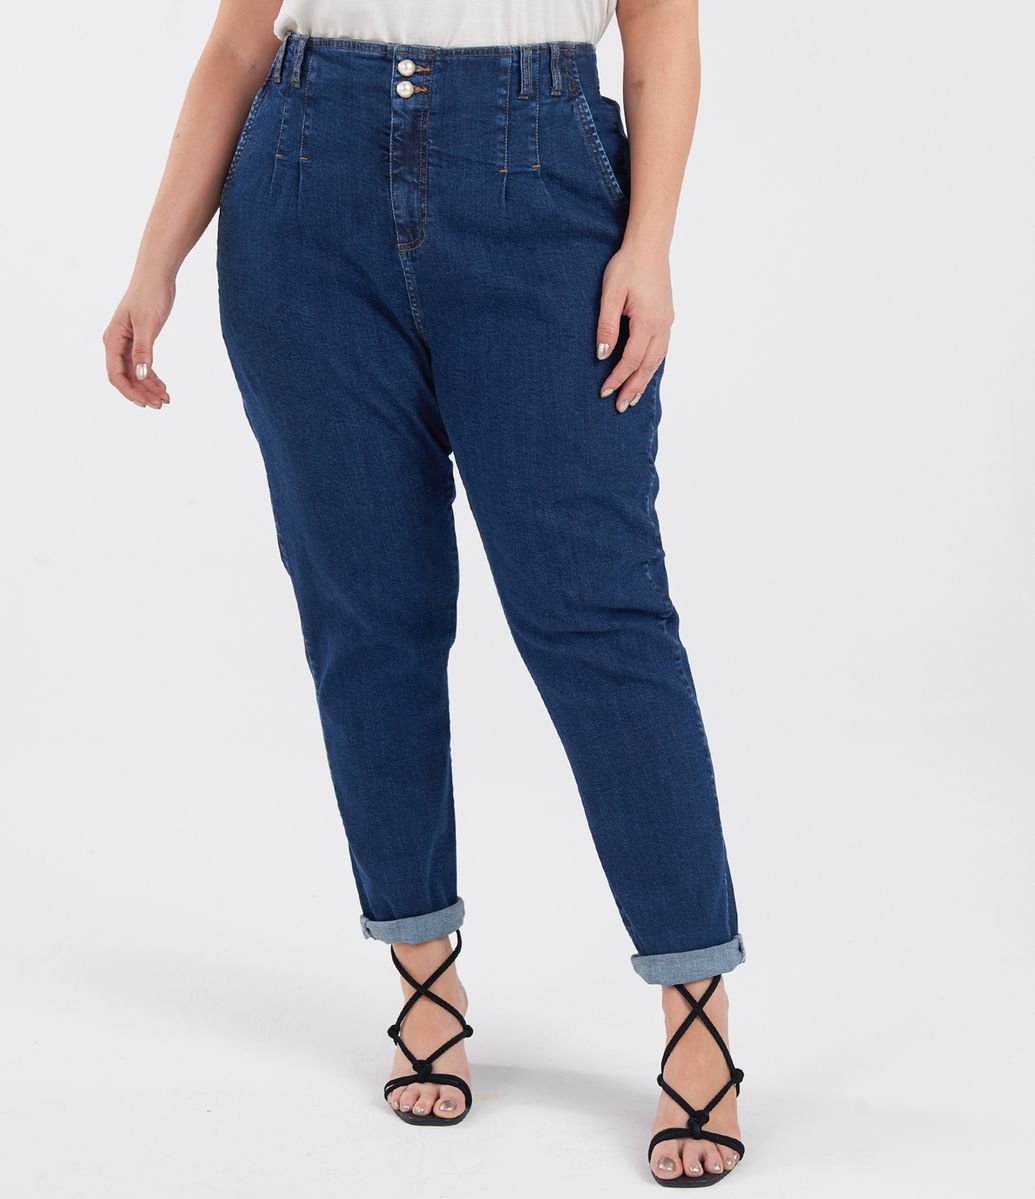 calça jeans feminina lojas renner